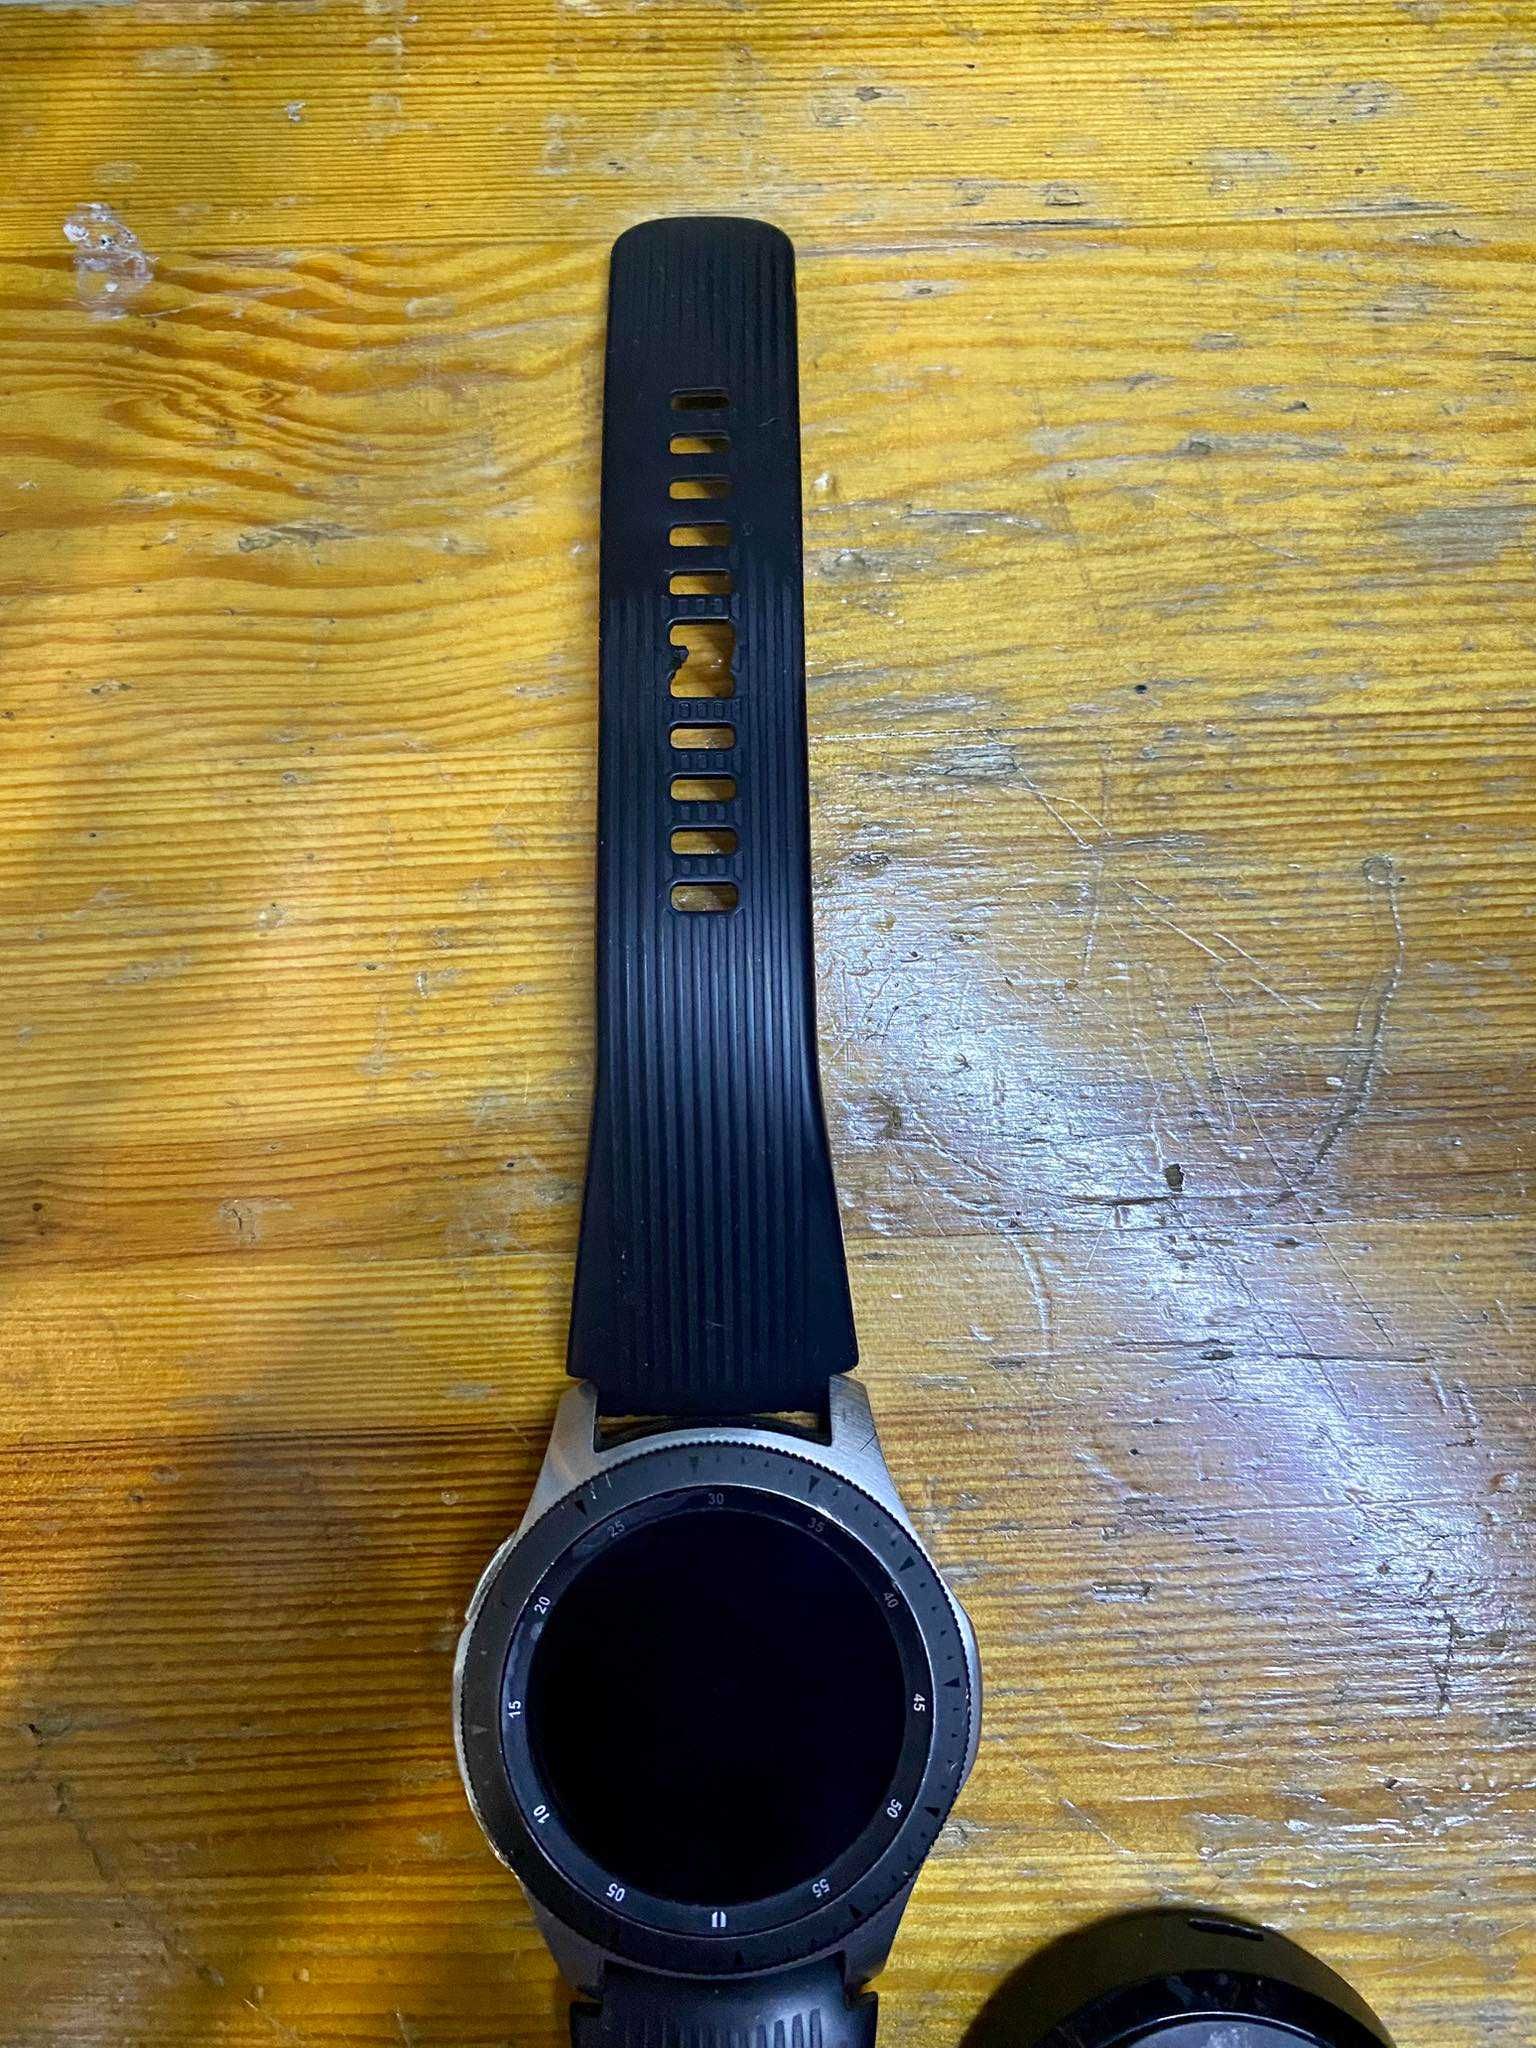 Zegarek Samsung Galaxy Watch SM-R800